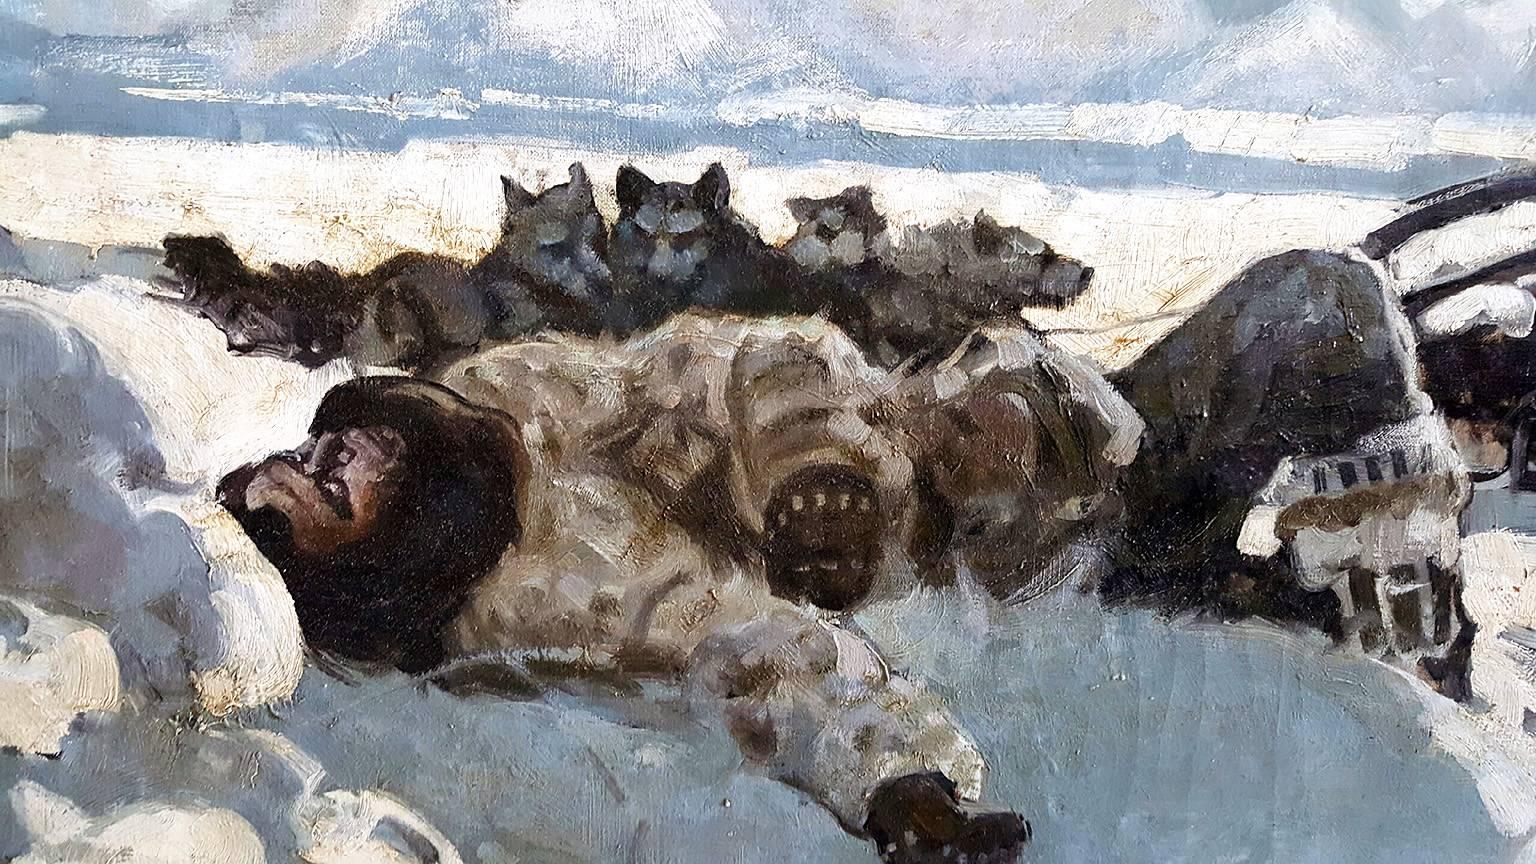 Alaskanische Husky-Hunde  - The Howl of the Malamute - Herren-Abenteurergeschichte (Grau), Landscape Painting, von Dan Content